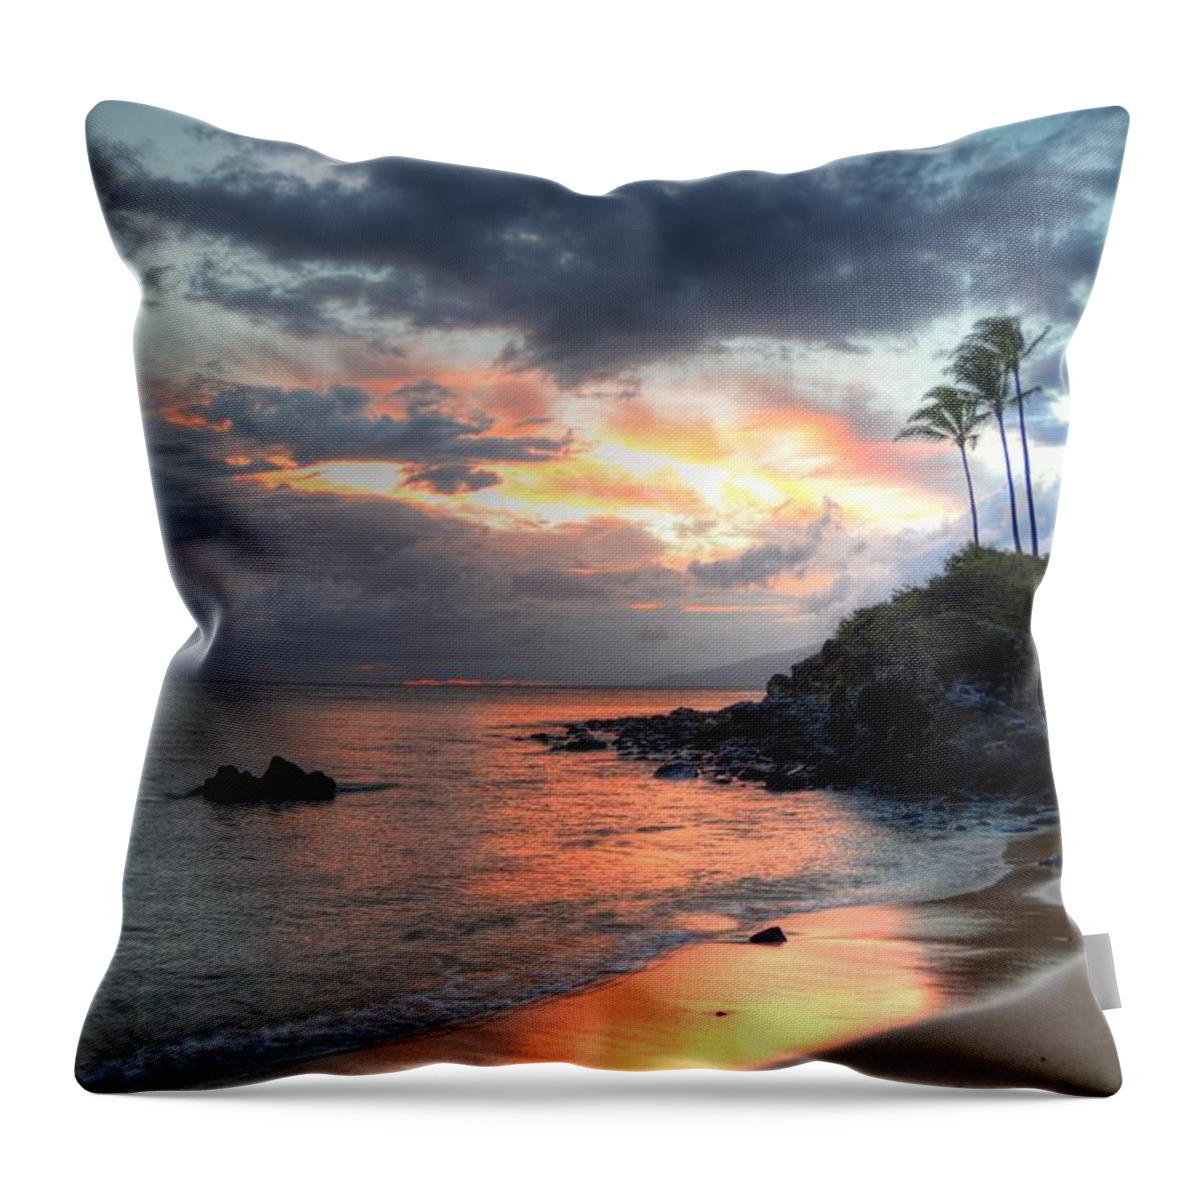 Kapalua Bay Throw Pillow featuring the photograph Kapalua Sunset by Kelly Wade